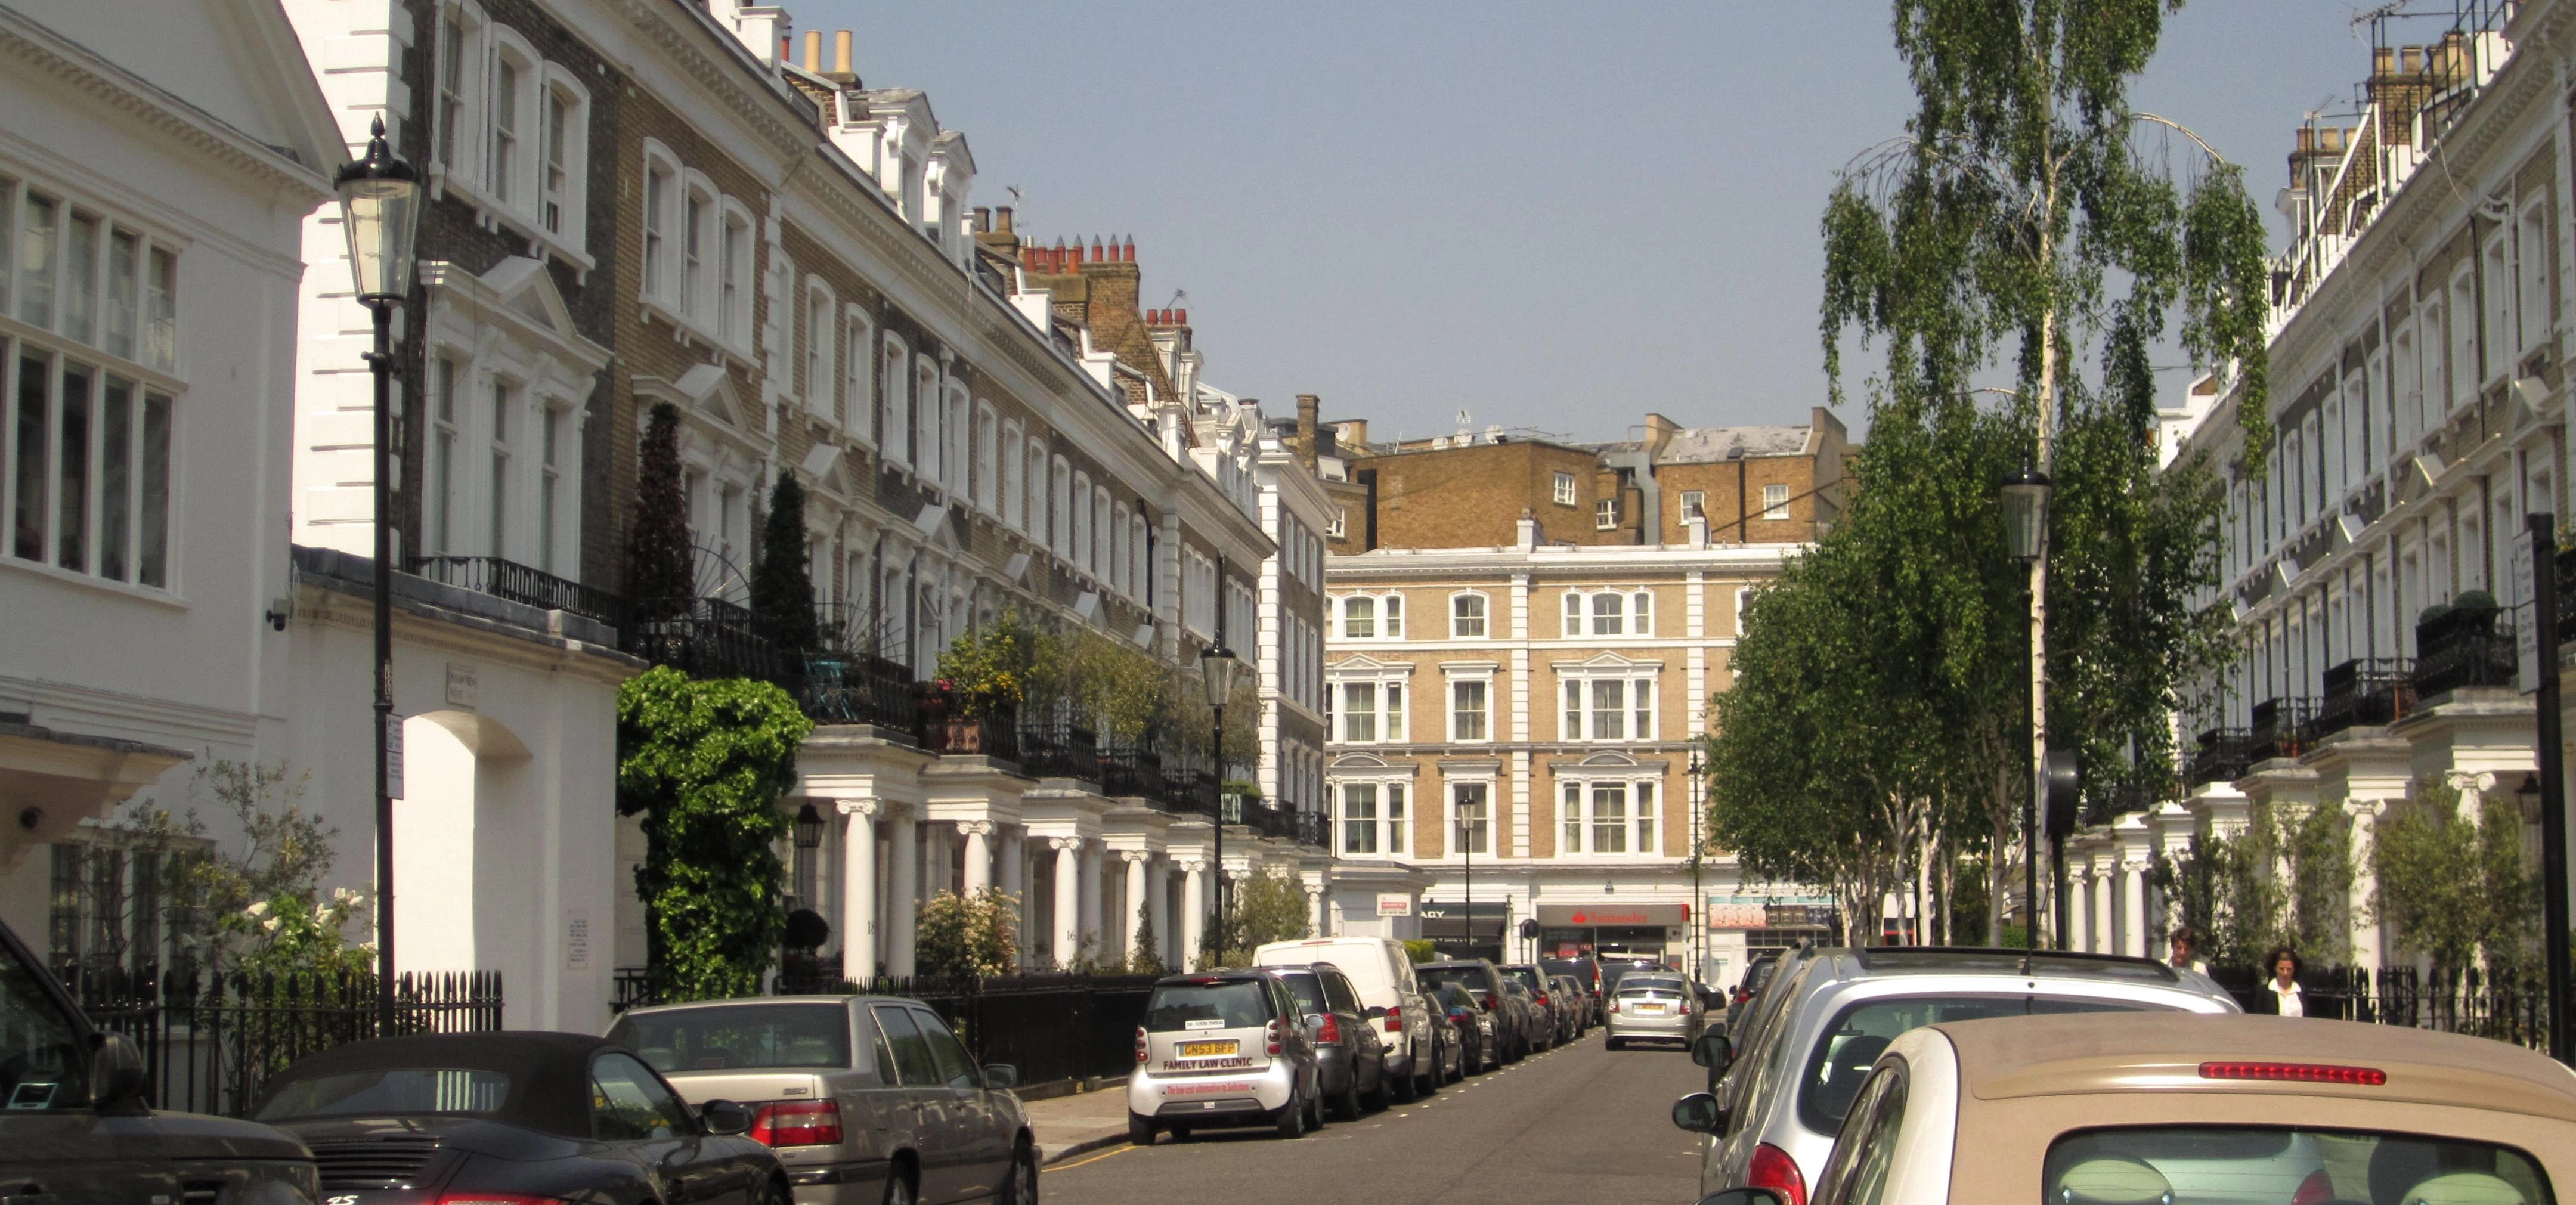 South Kensington neighborhood